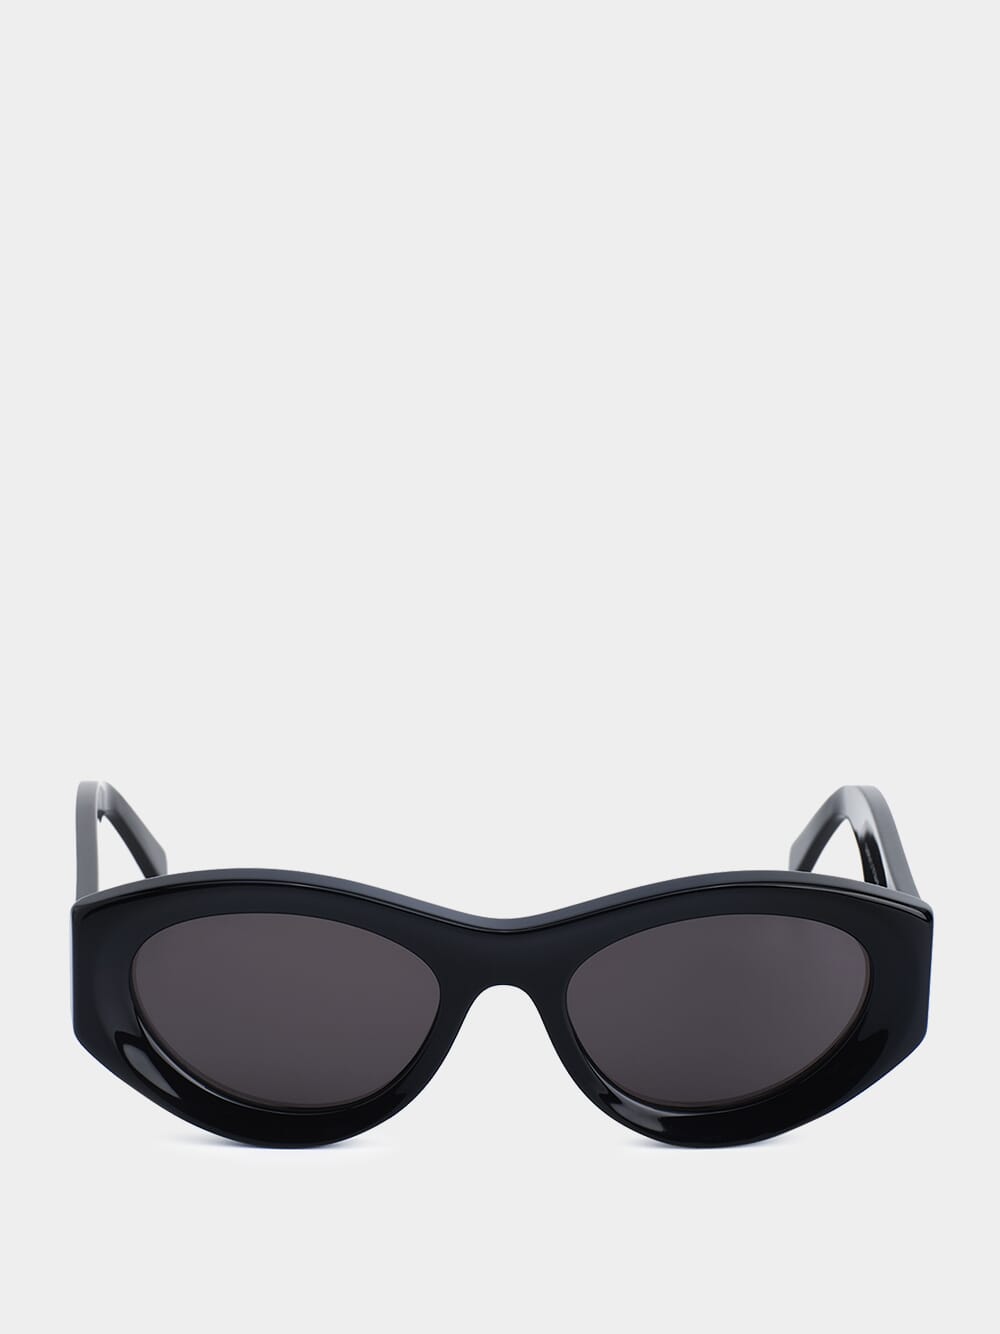 Calypso Oval Black Sunglasses